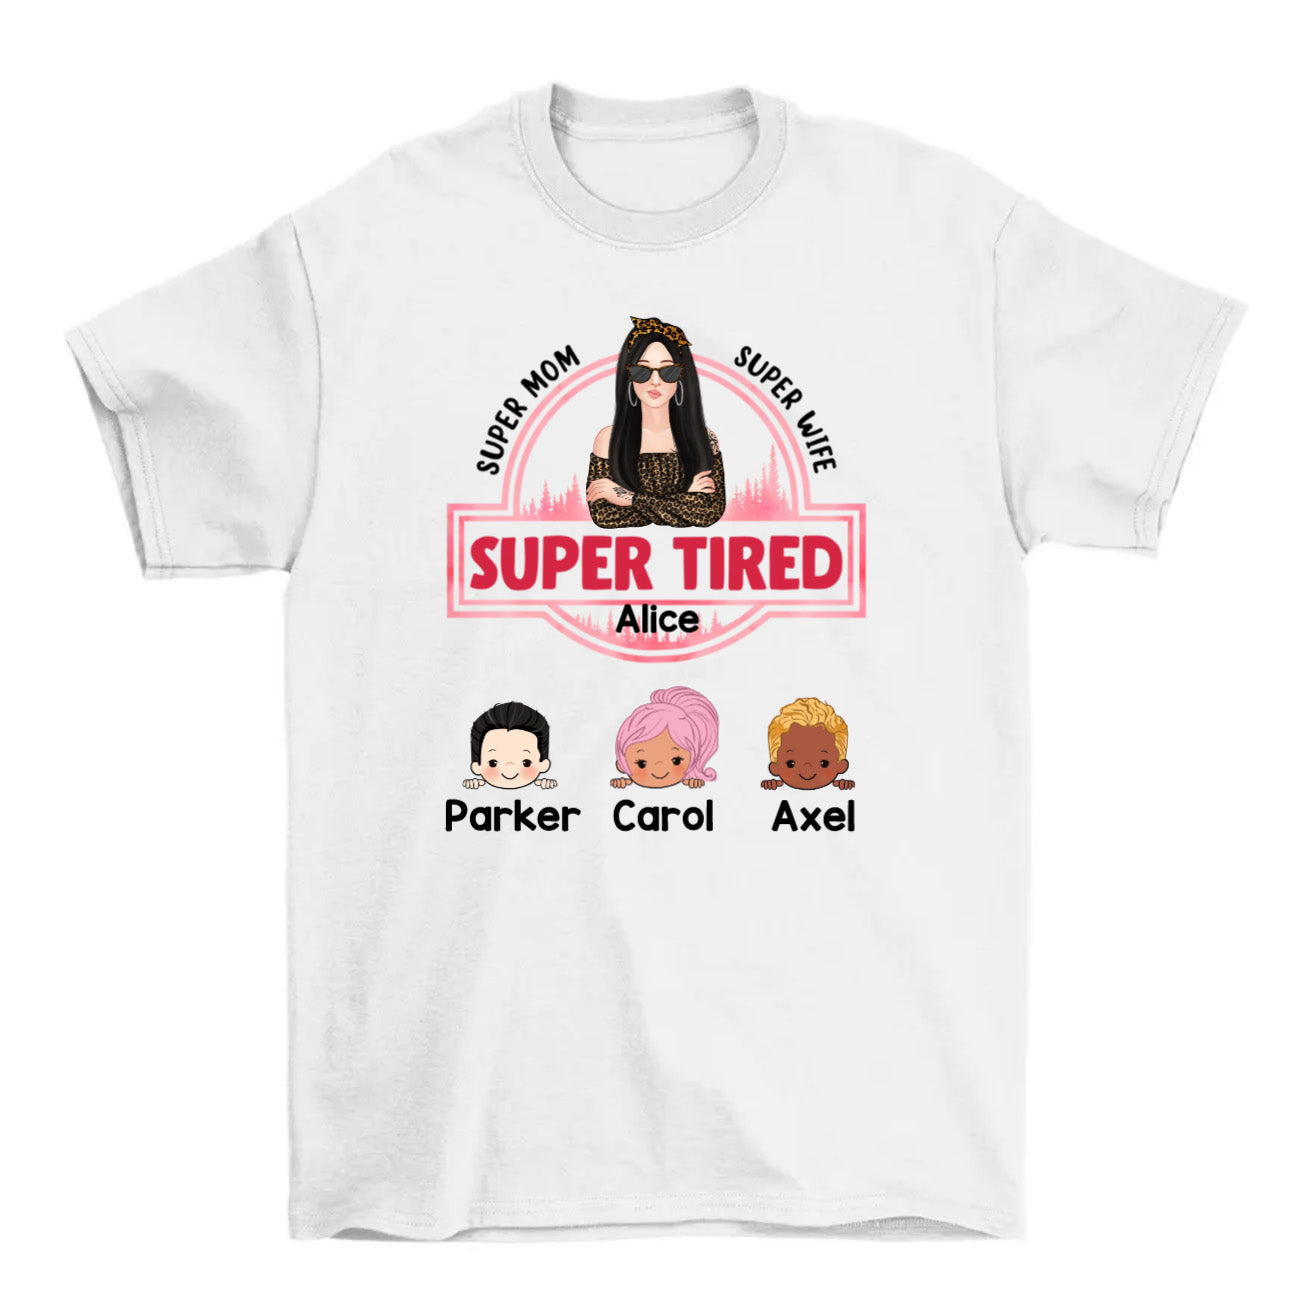 Super Mom Super Wife Super Tire パーソナライズシャツ